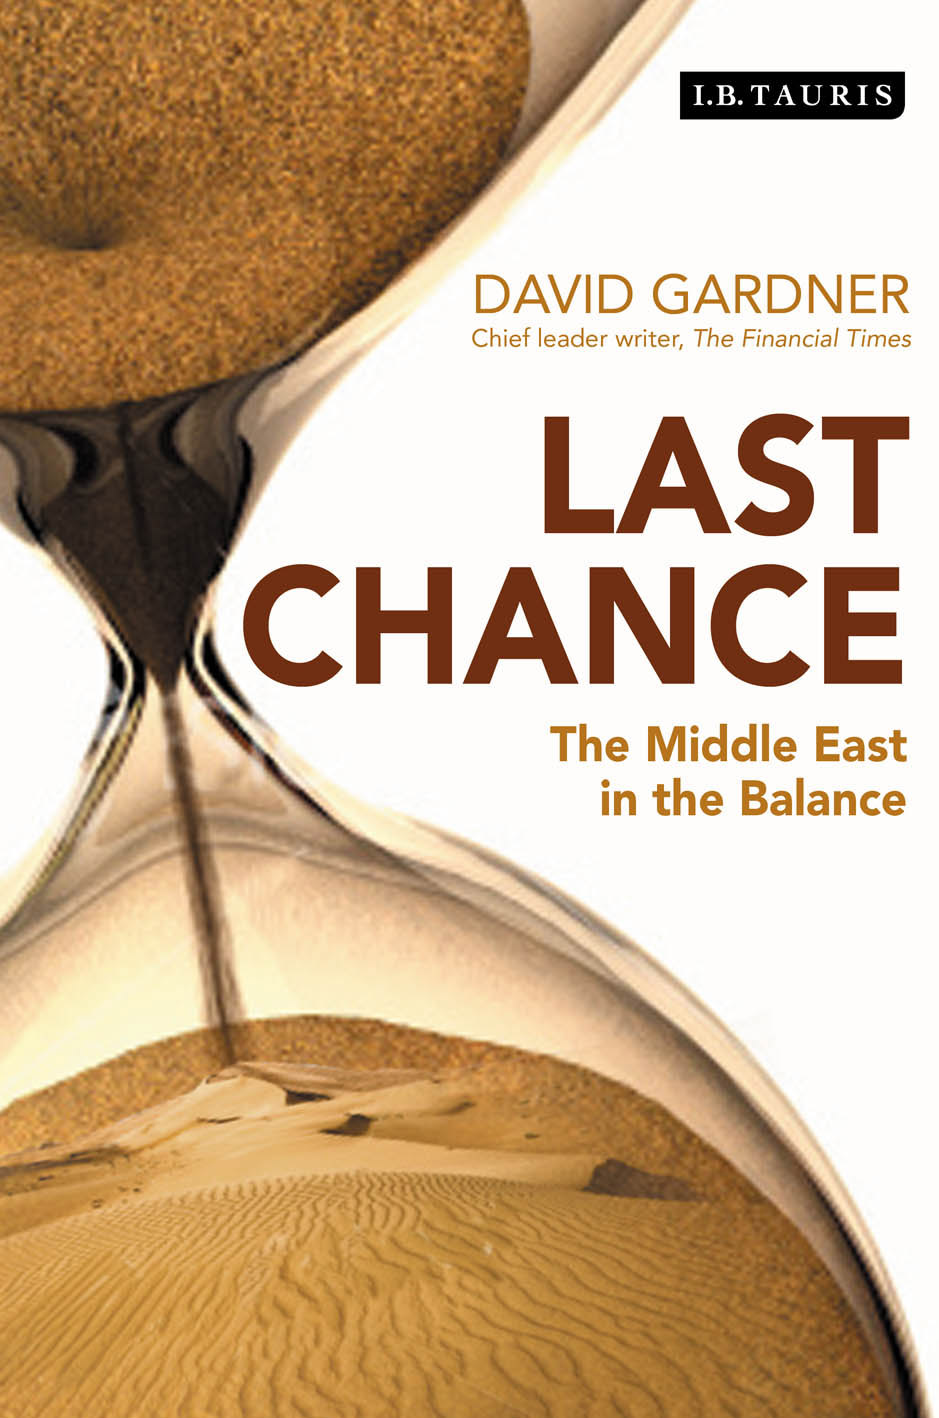 David Gardner's Last Chance